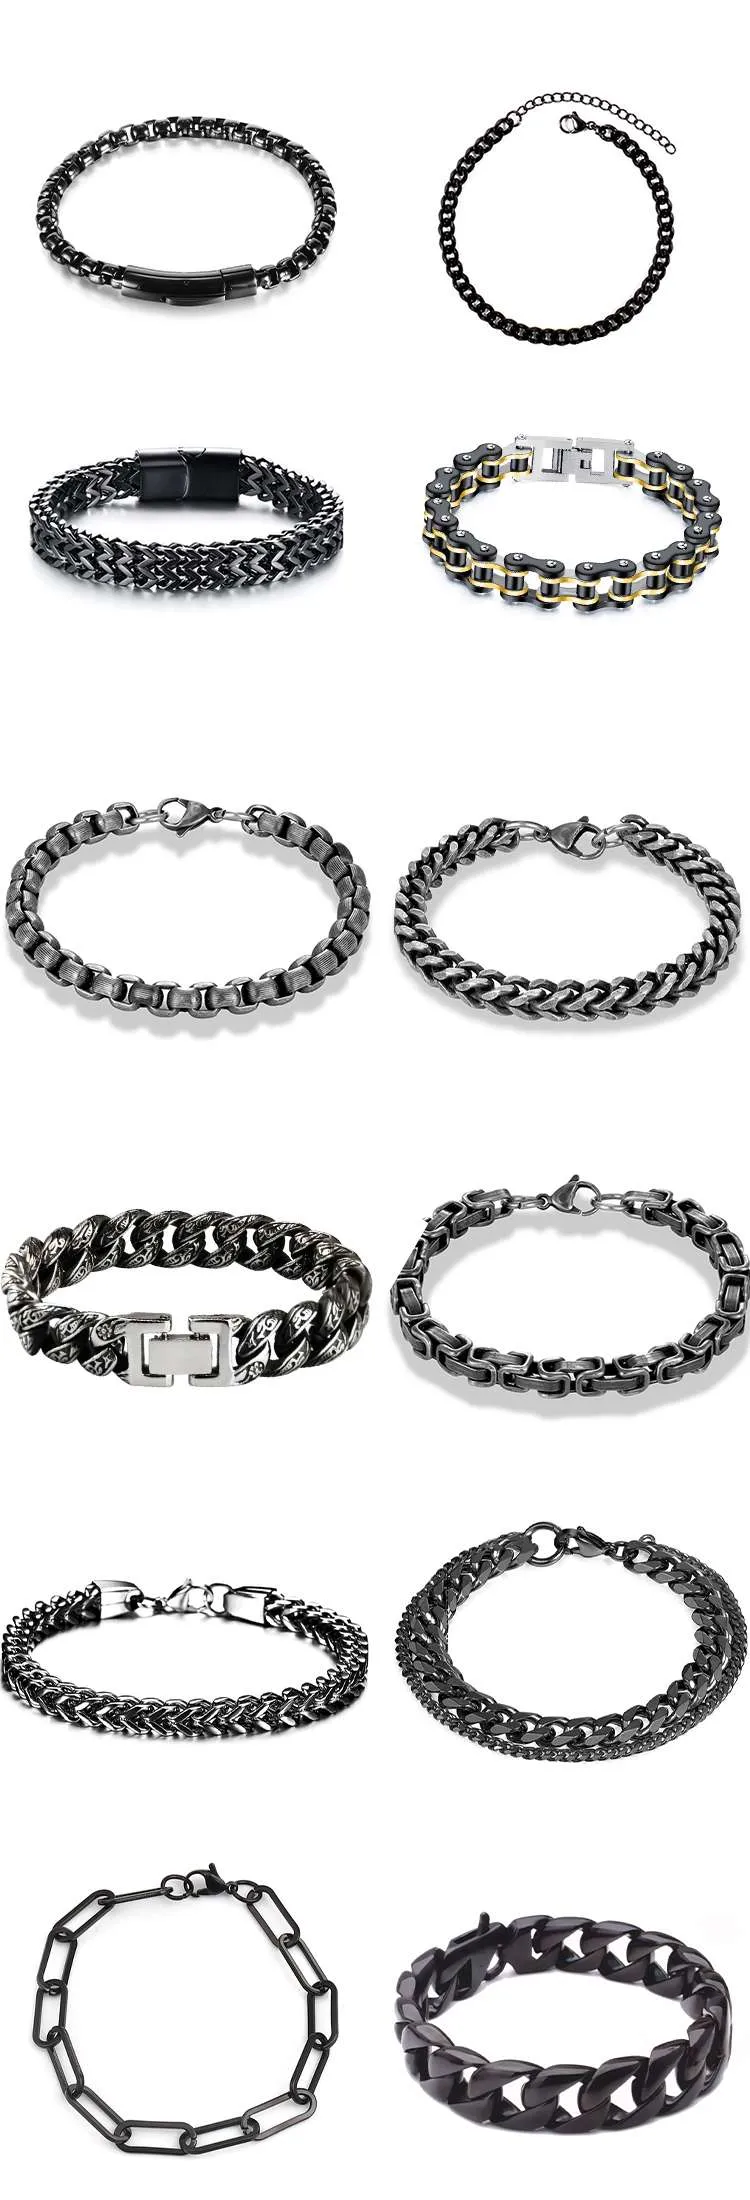 Black plated stainless steel bracelets